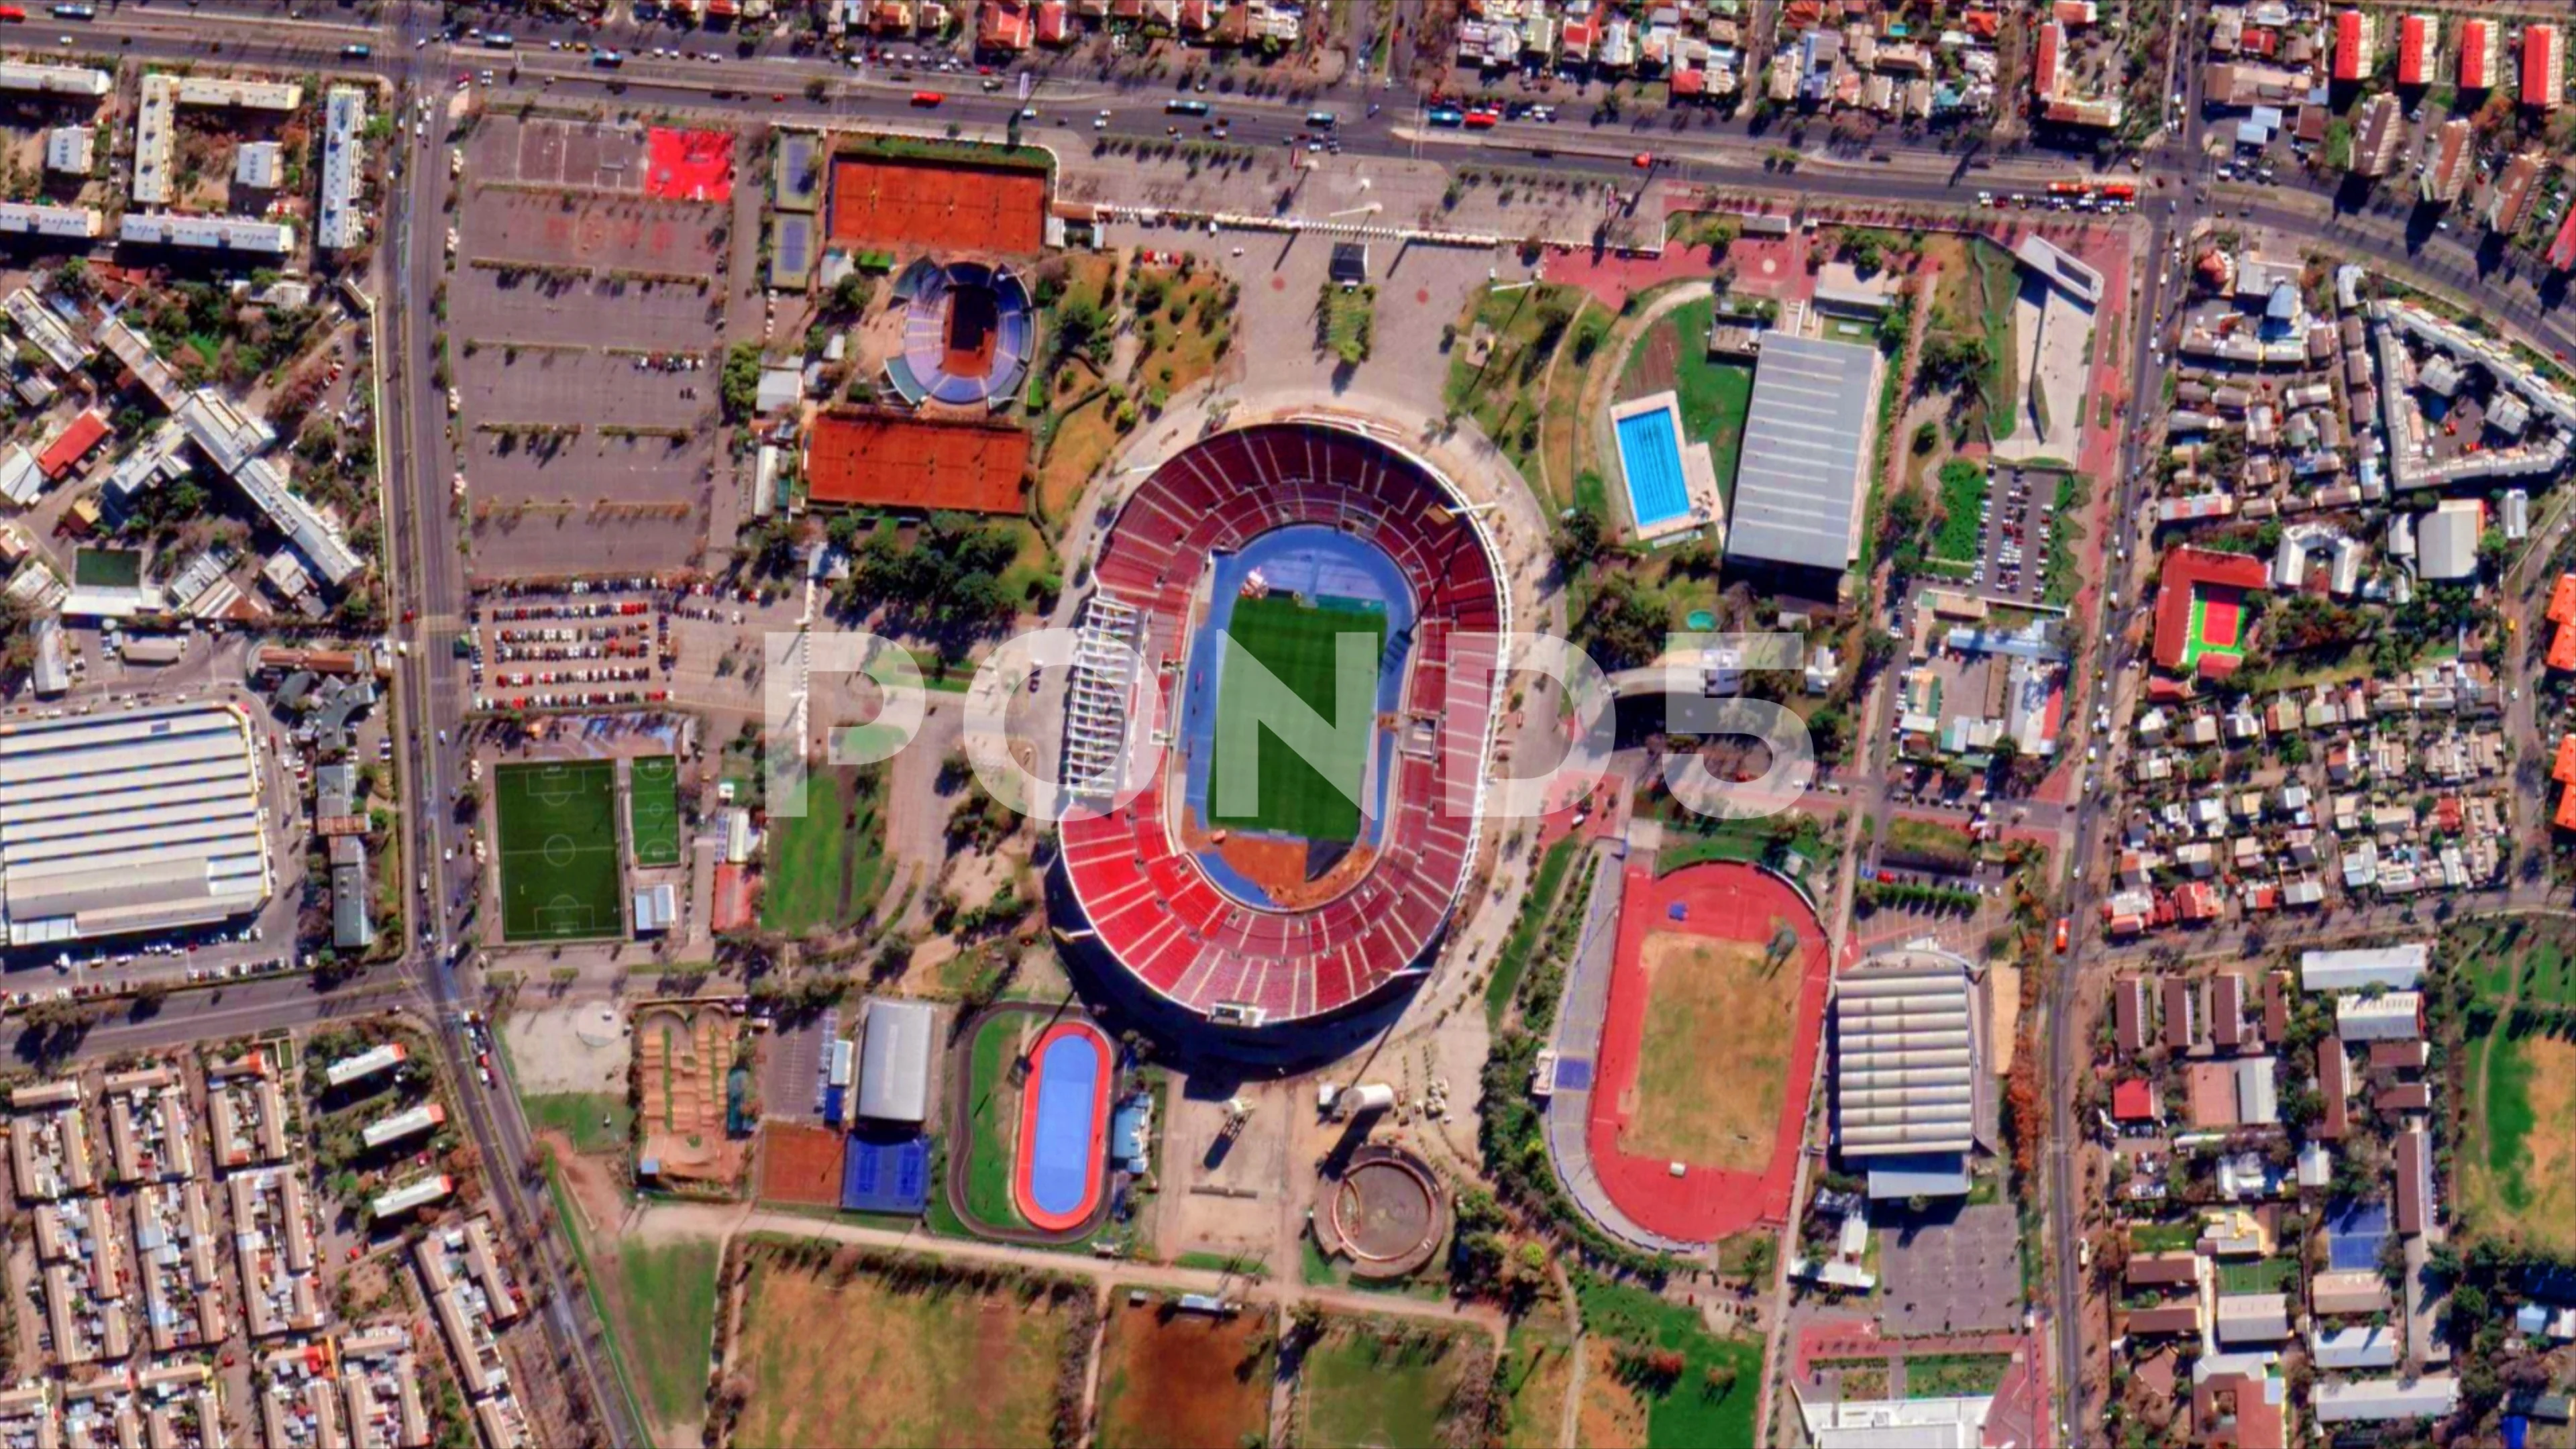 Estadio nacional julio martinez pradanos hi-res stock photography